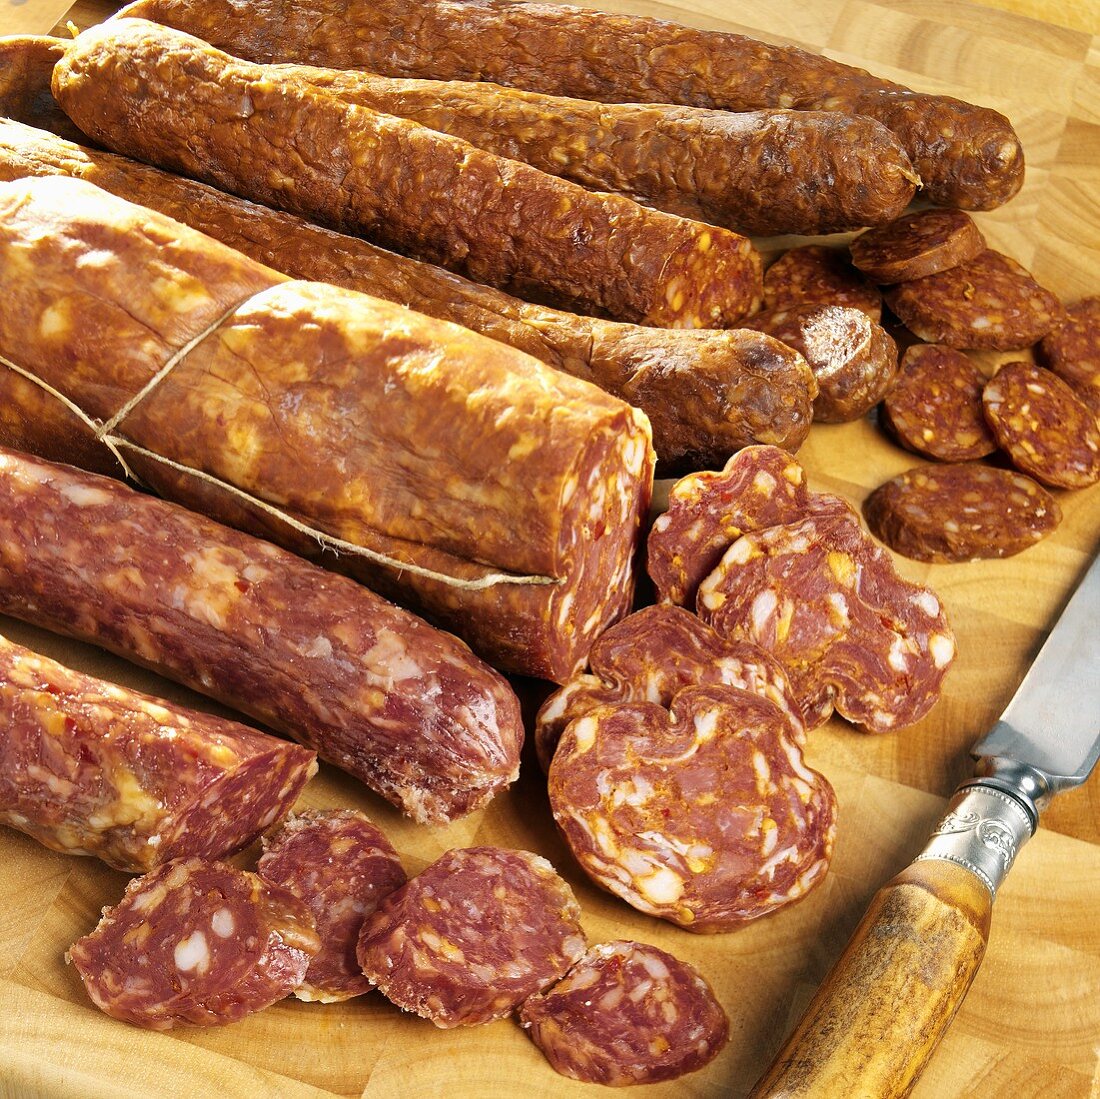 Paprika sausage, sopressata and Calabrese sausages, slices cut